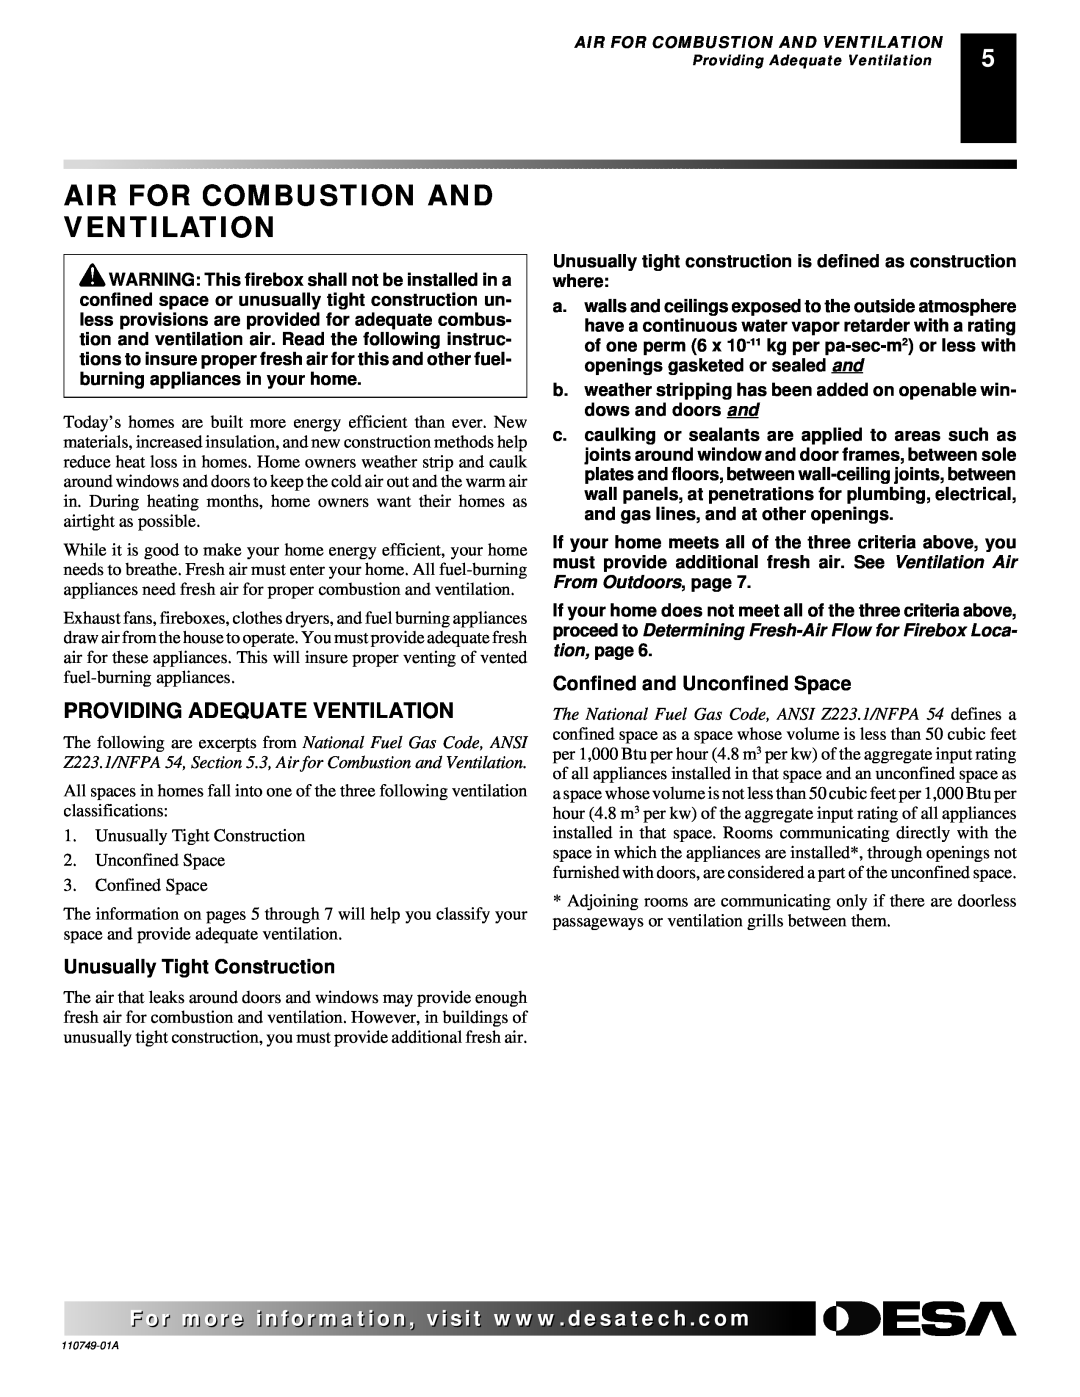 Desa V50SH, VFB50NC installation manual Air For Combustion And Ventilation, Providing Adequate Ventilation 